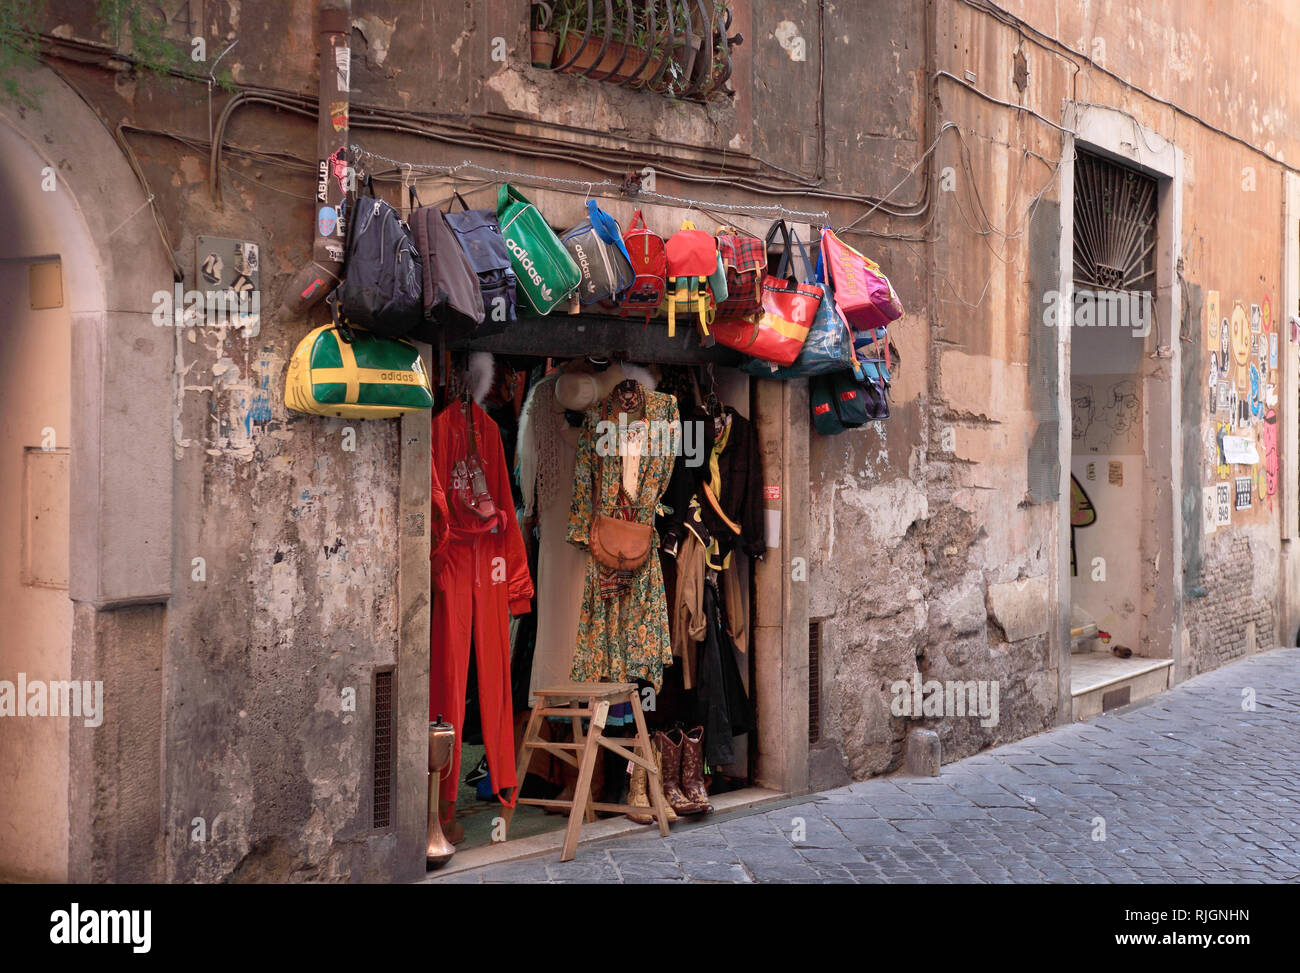 small second hand shop in a side street, Campo de fiori, Rome, Italy Stock Photo